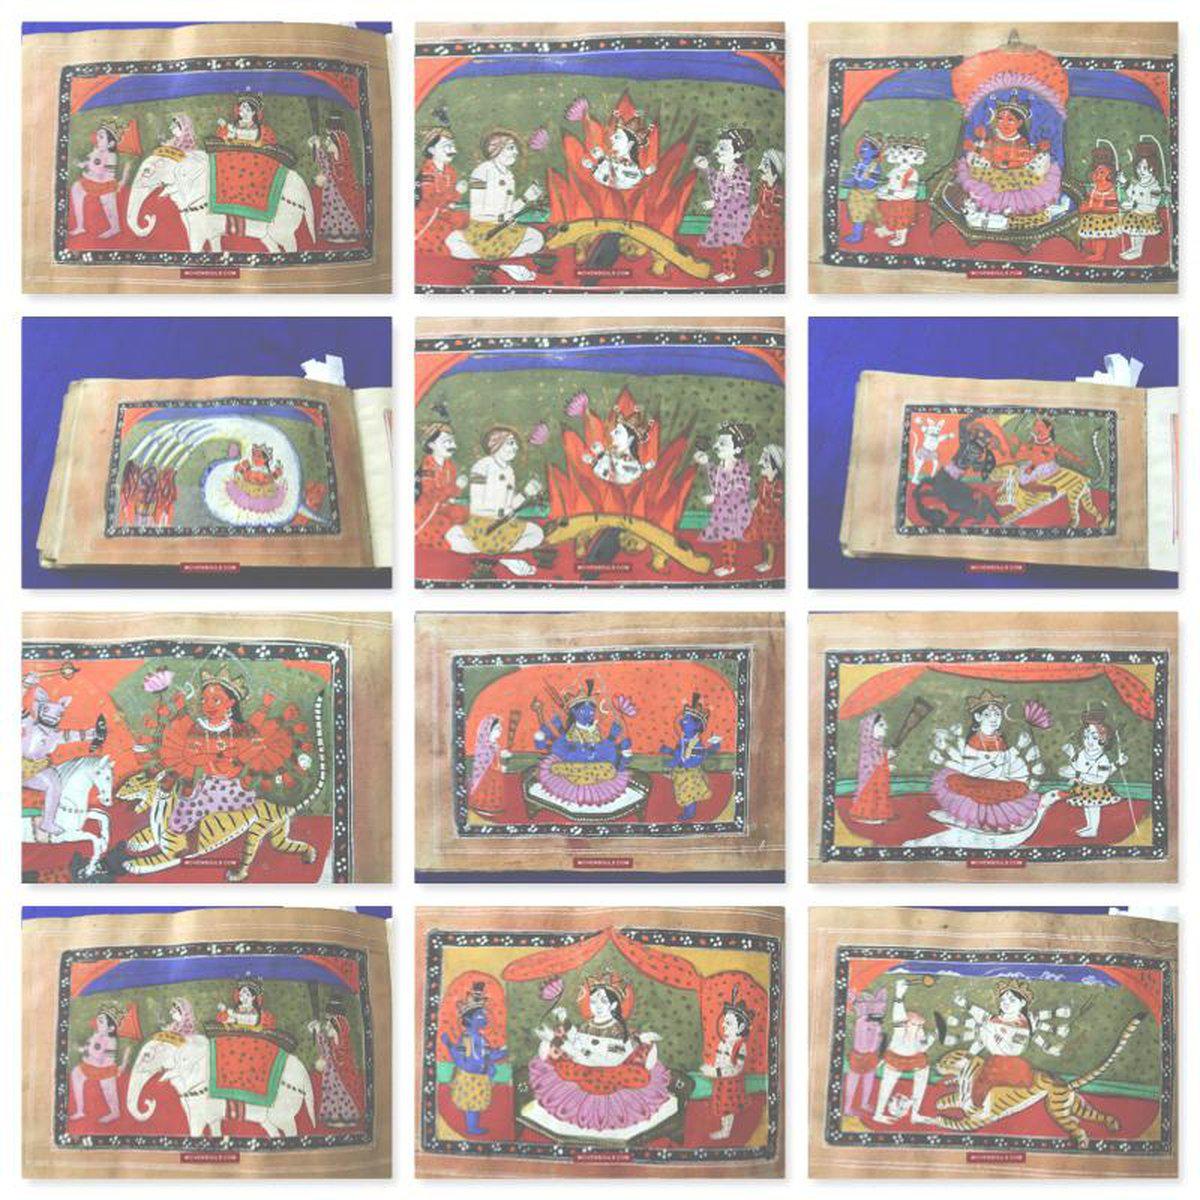 9007 Indian Sanskrit Manuscript with Miniature Paintings ...